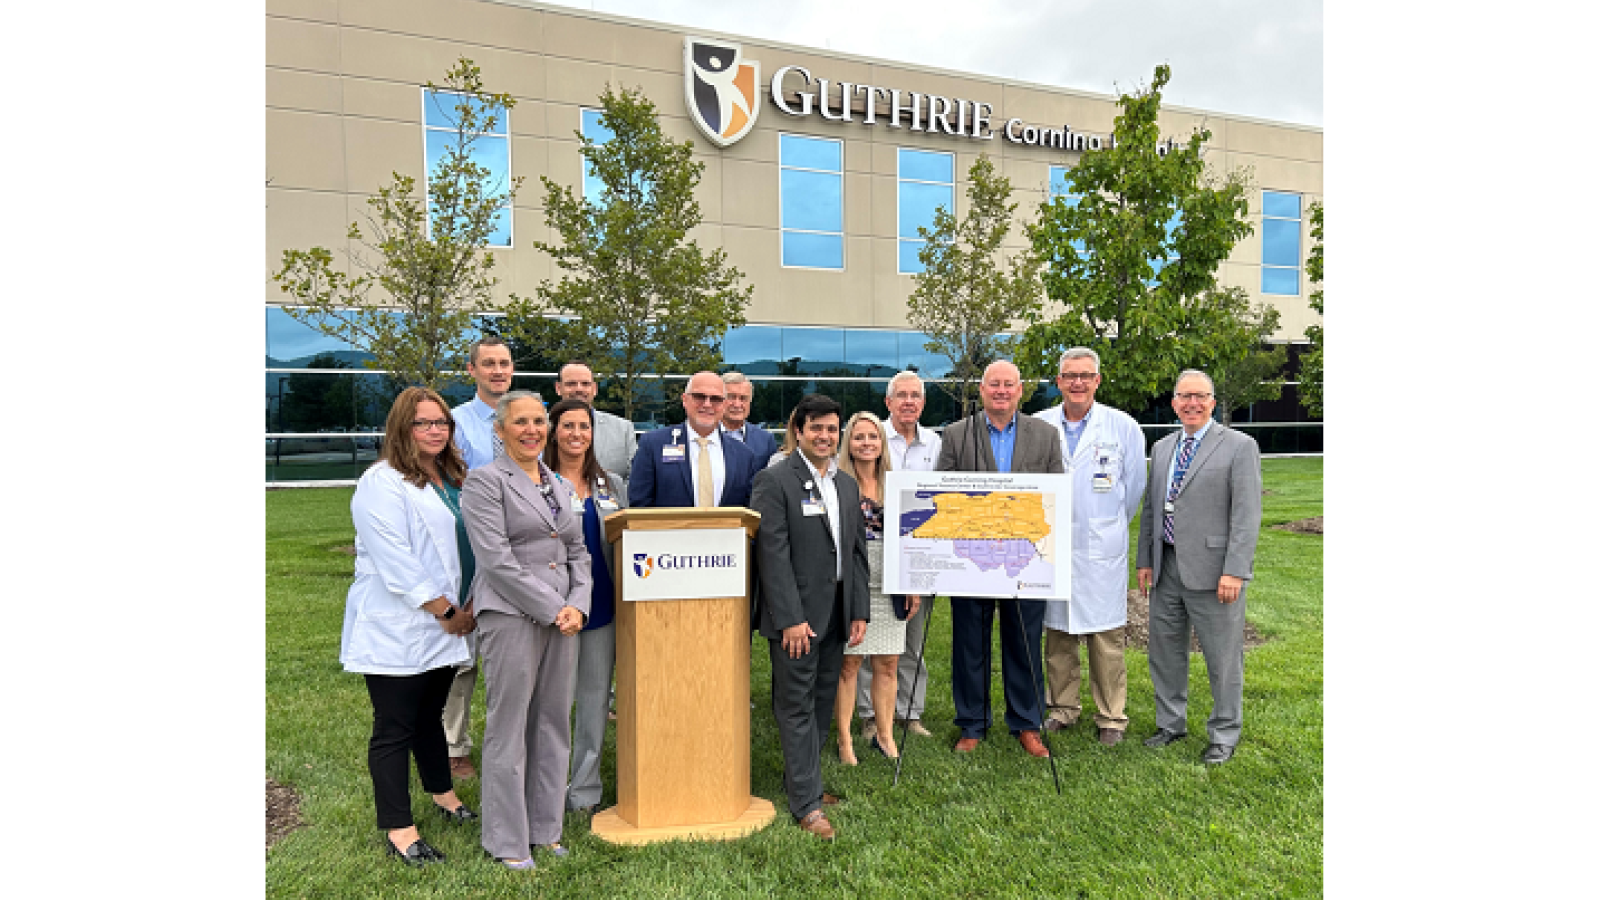 Guthrie Corning Hospital Named Provisional Level III Trauma Center